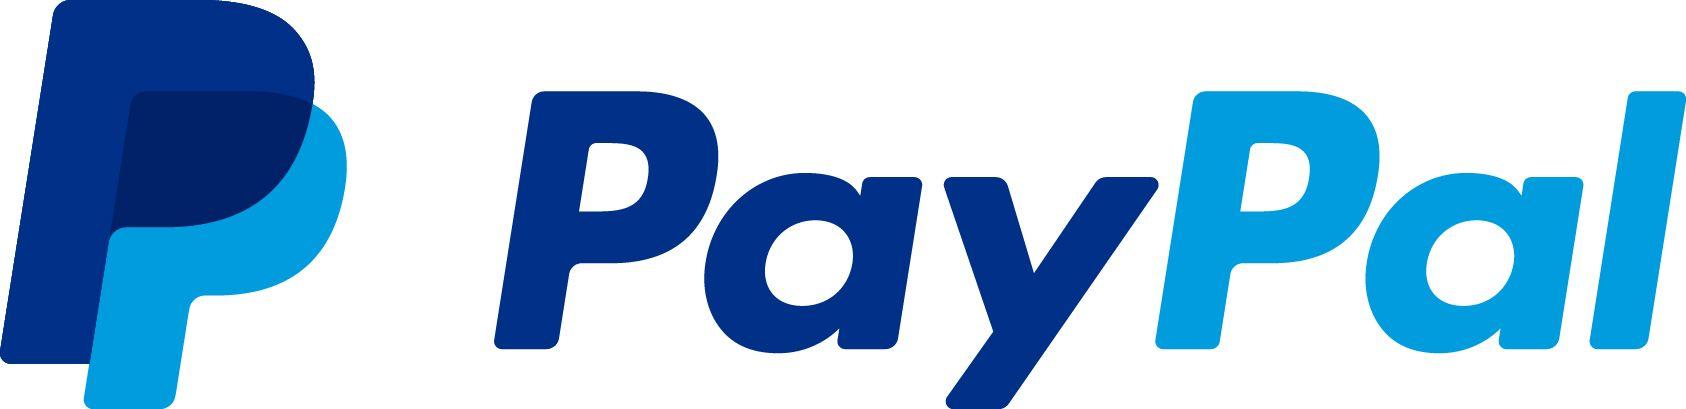 PayPal 2017 Logo - Media Resources